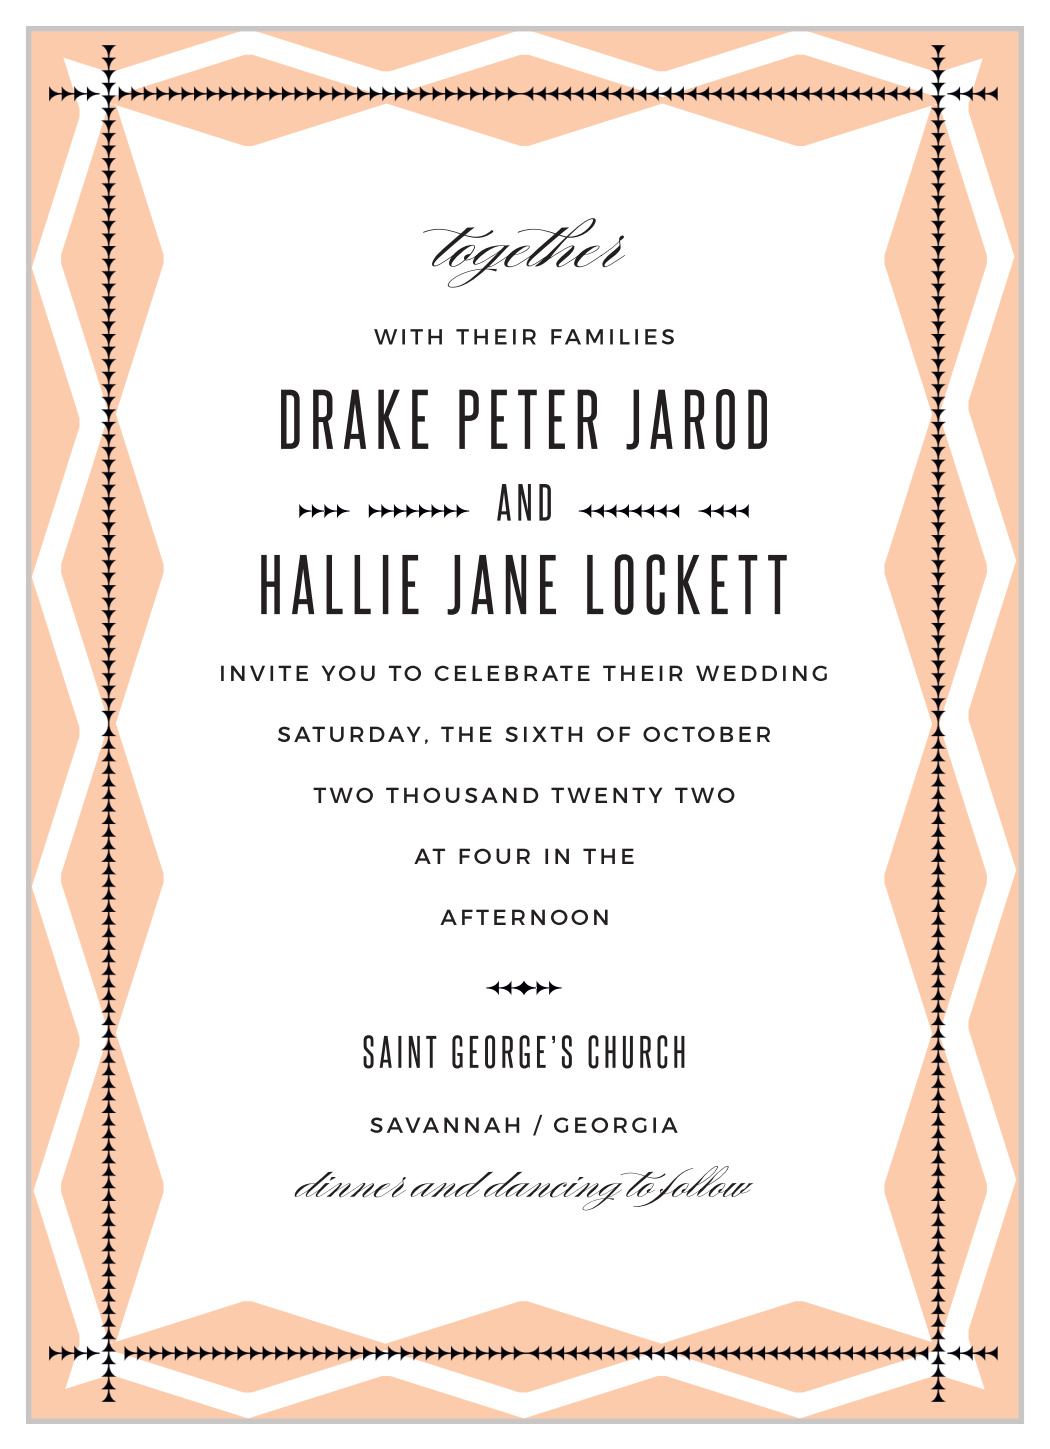 MaeMae's Ralph Wedding Invitations